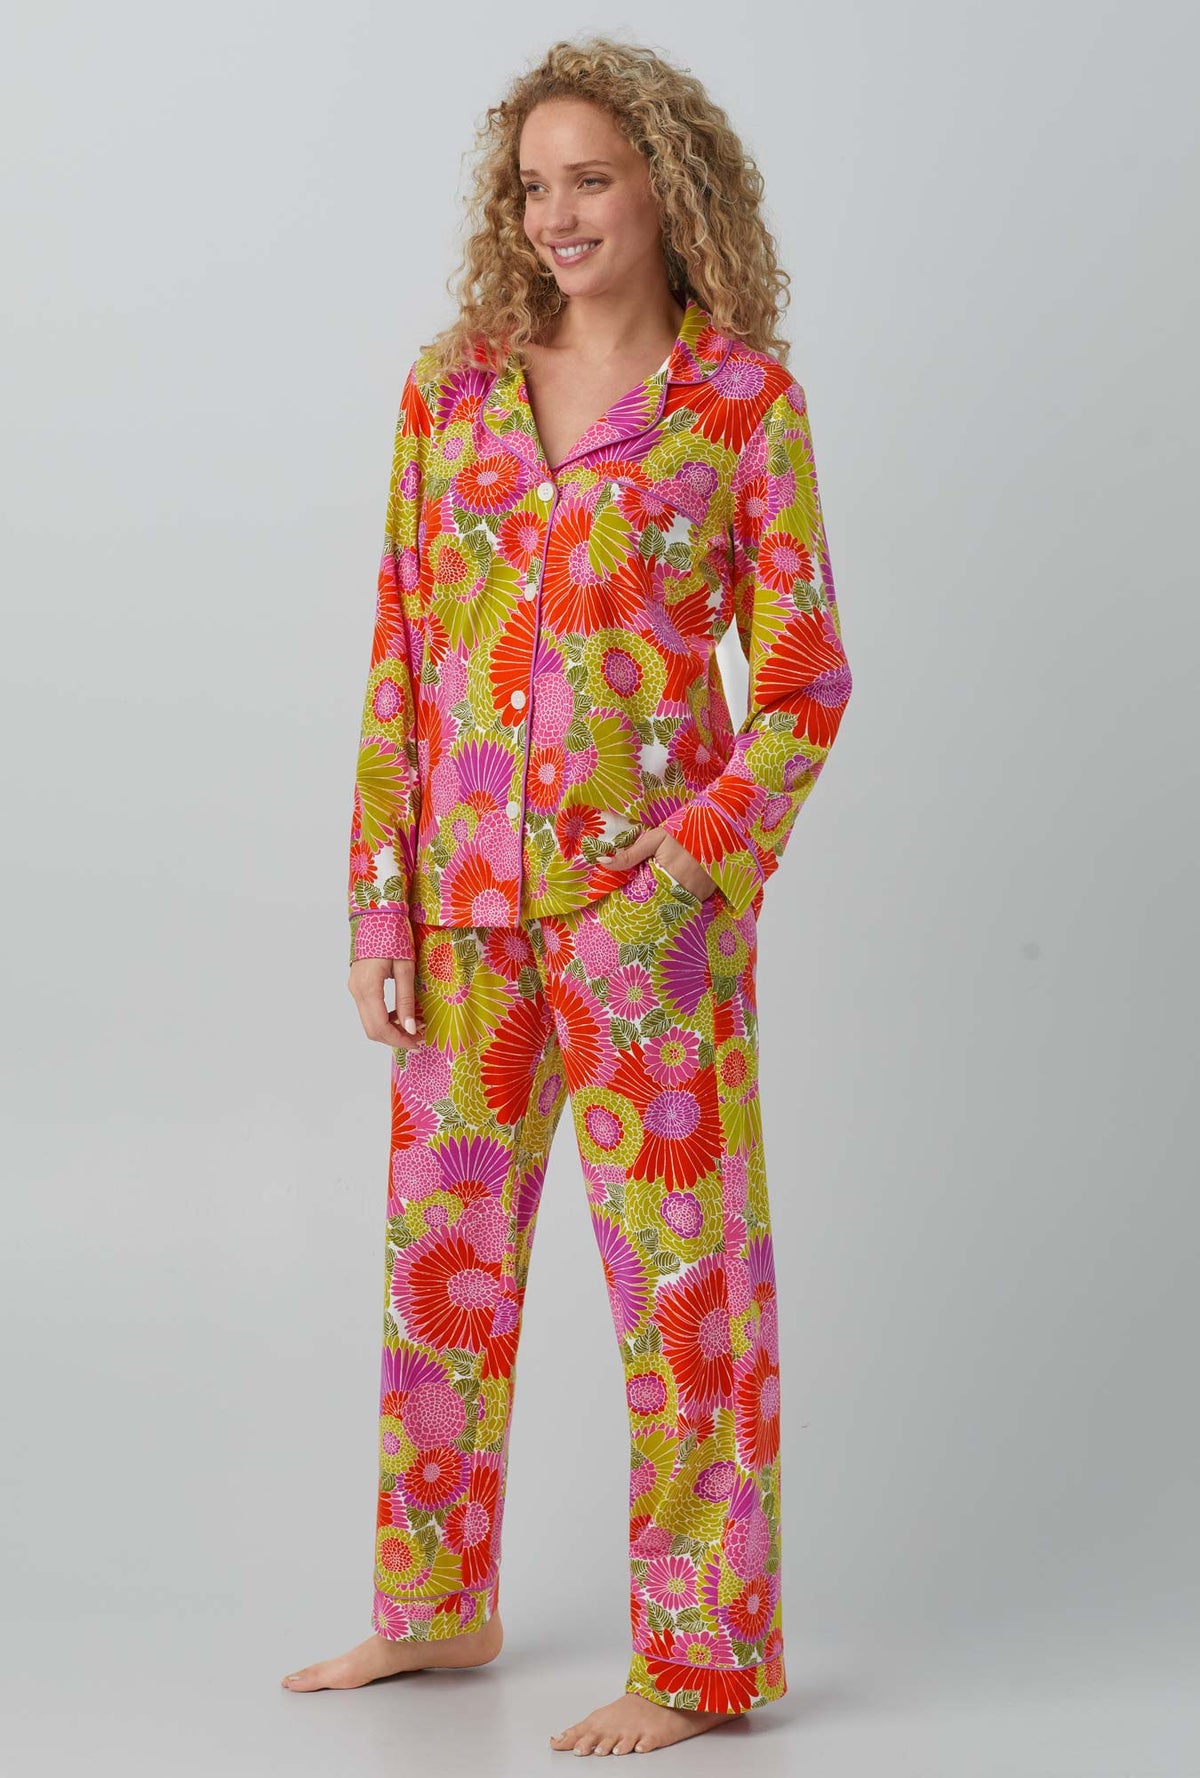 A lady wearing Warm Sand Botanical Long Sleeve Classic Stretch Jersey PJ Set